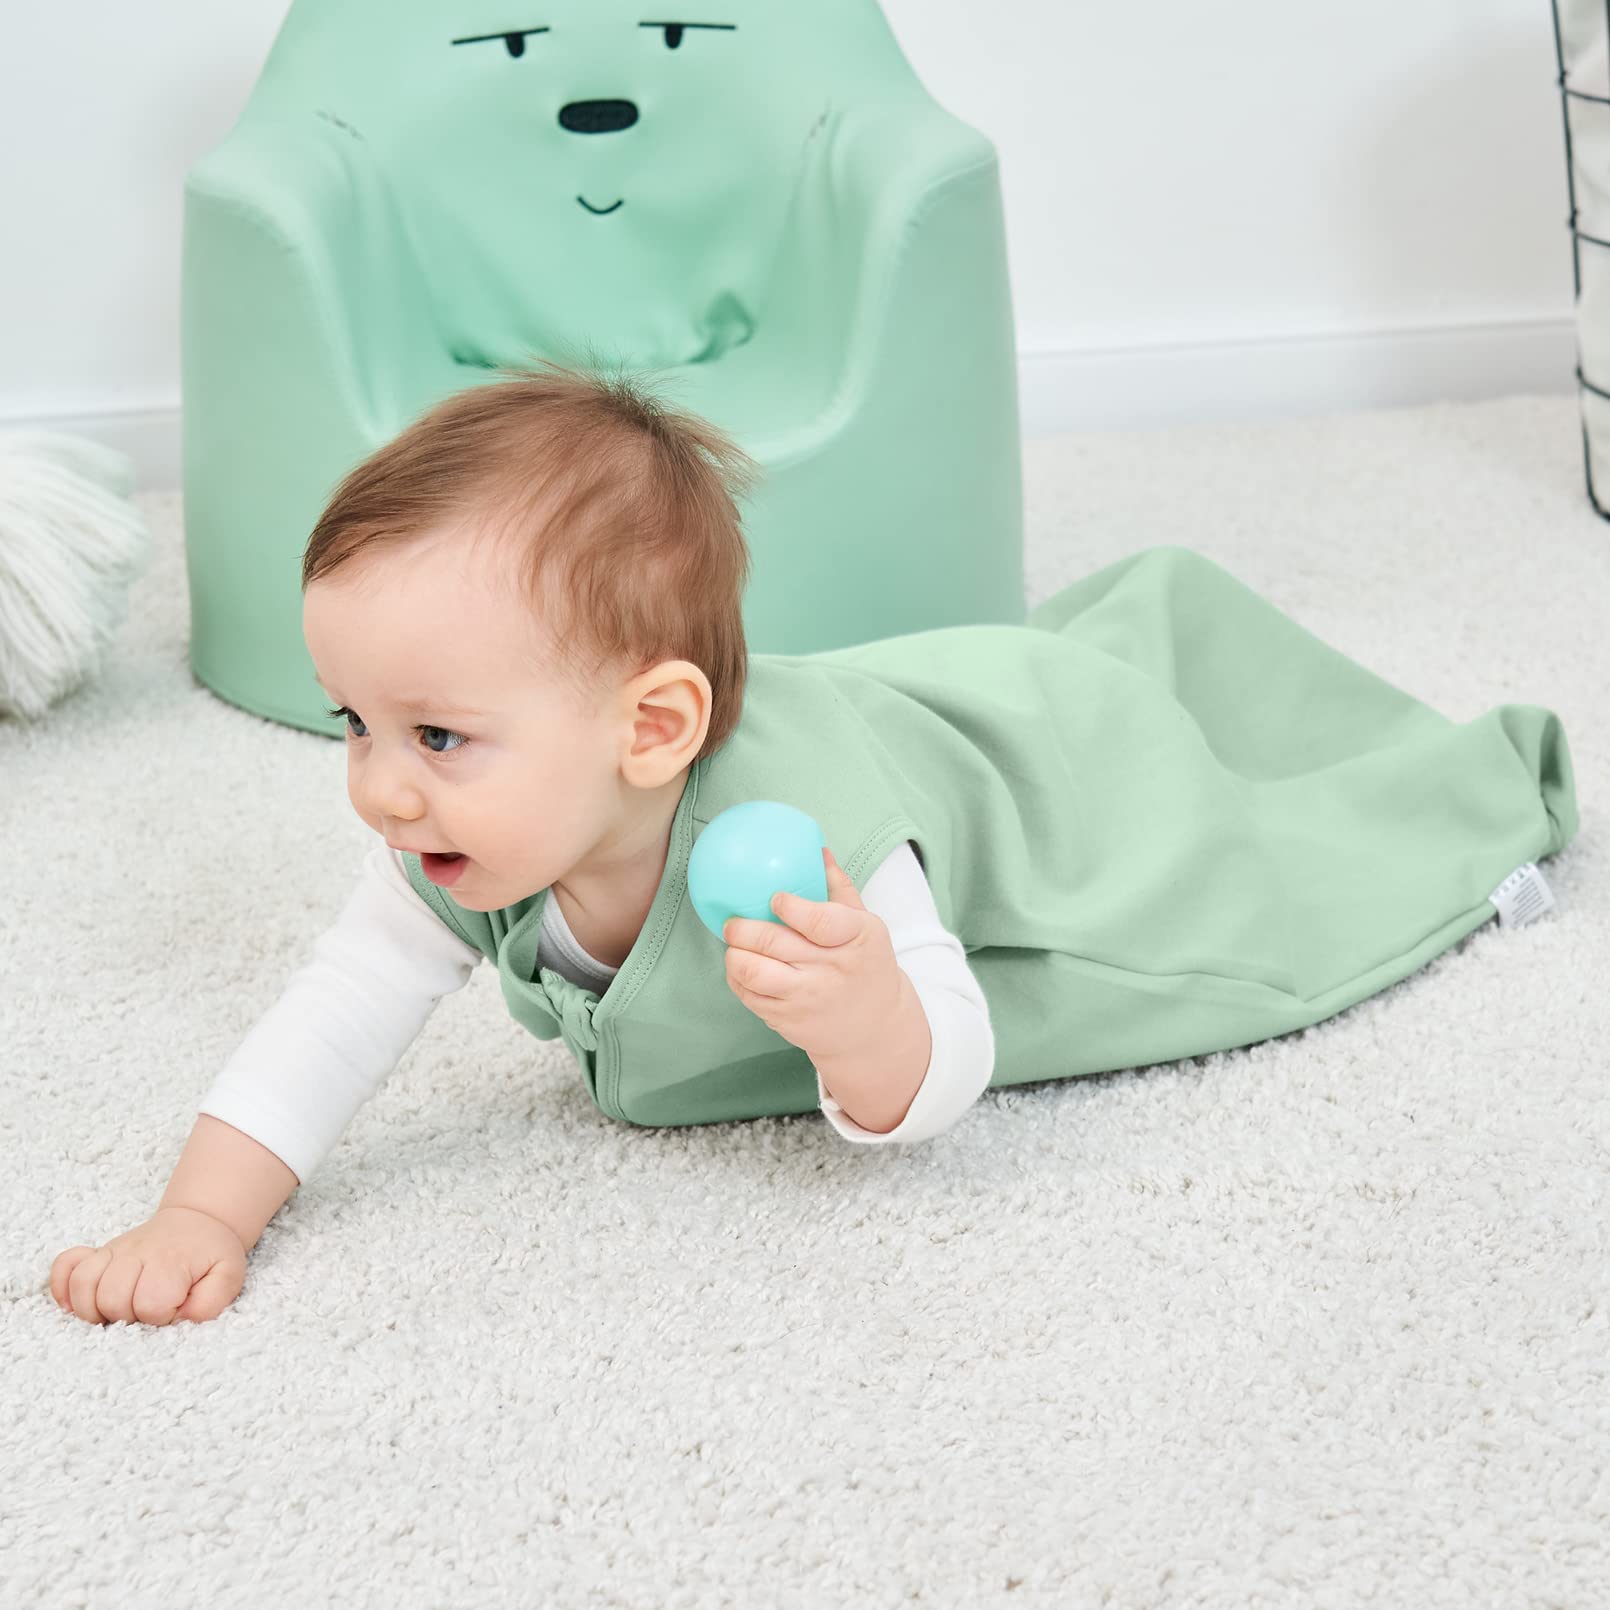 Yoofoss Baby Sleep Sack, 100% Cotton Baby Blanket with Zipper, Pack of 3